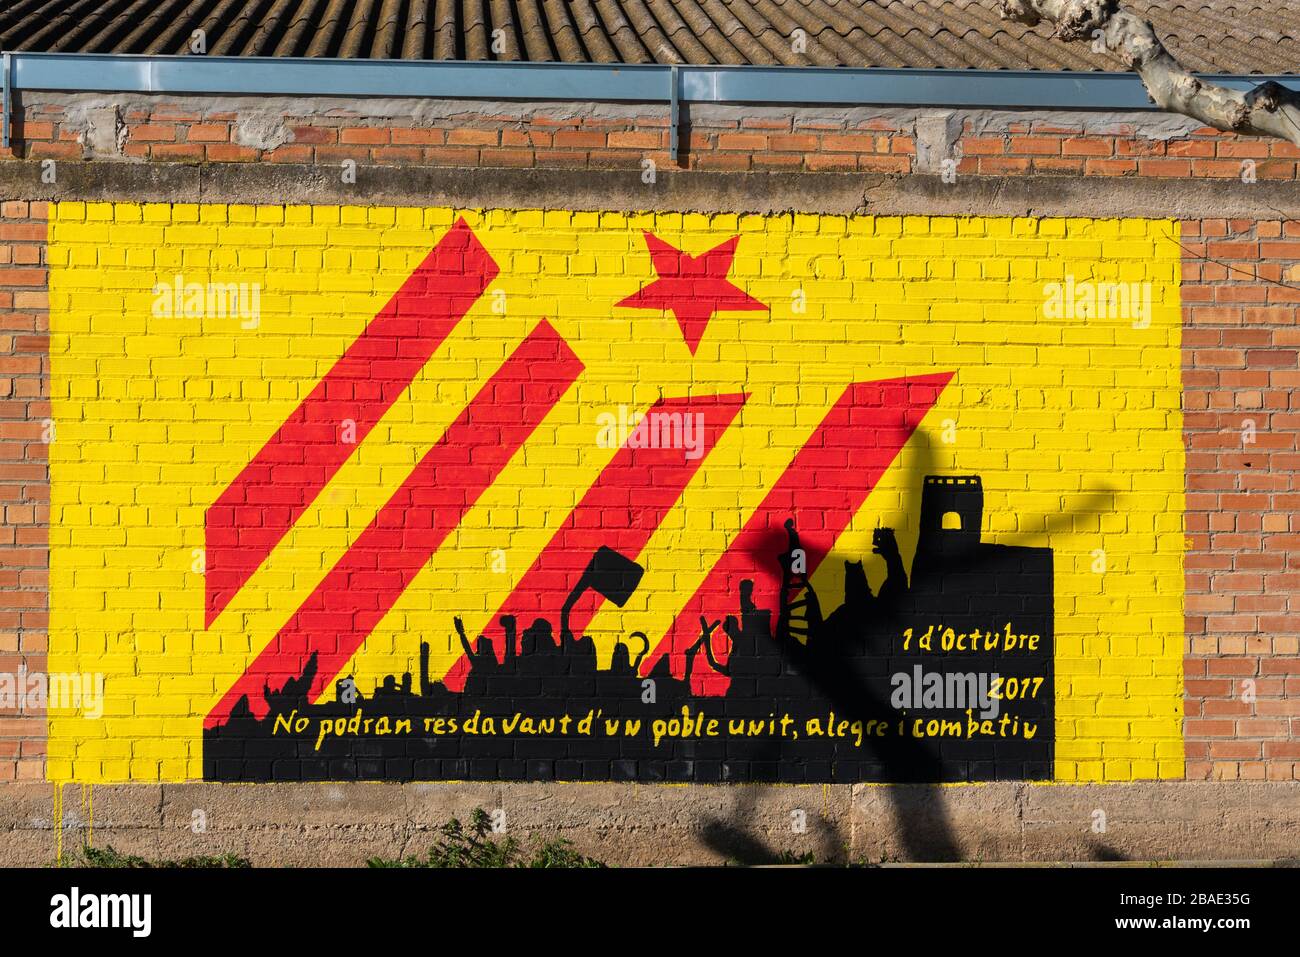 February 19, 2020 - Preixana. Graffiti promoting the separatism movement in Catalonia. Stock Photo